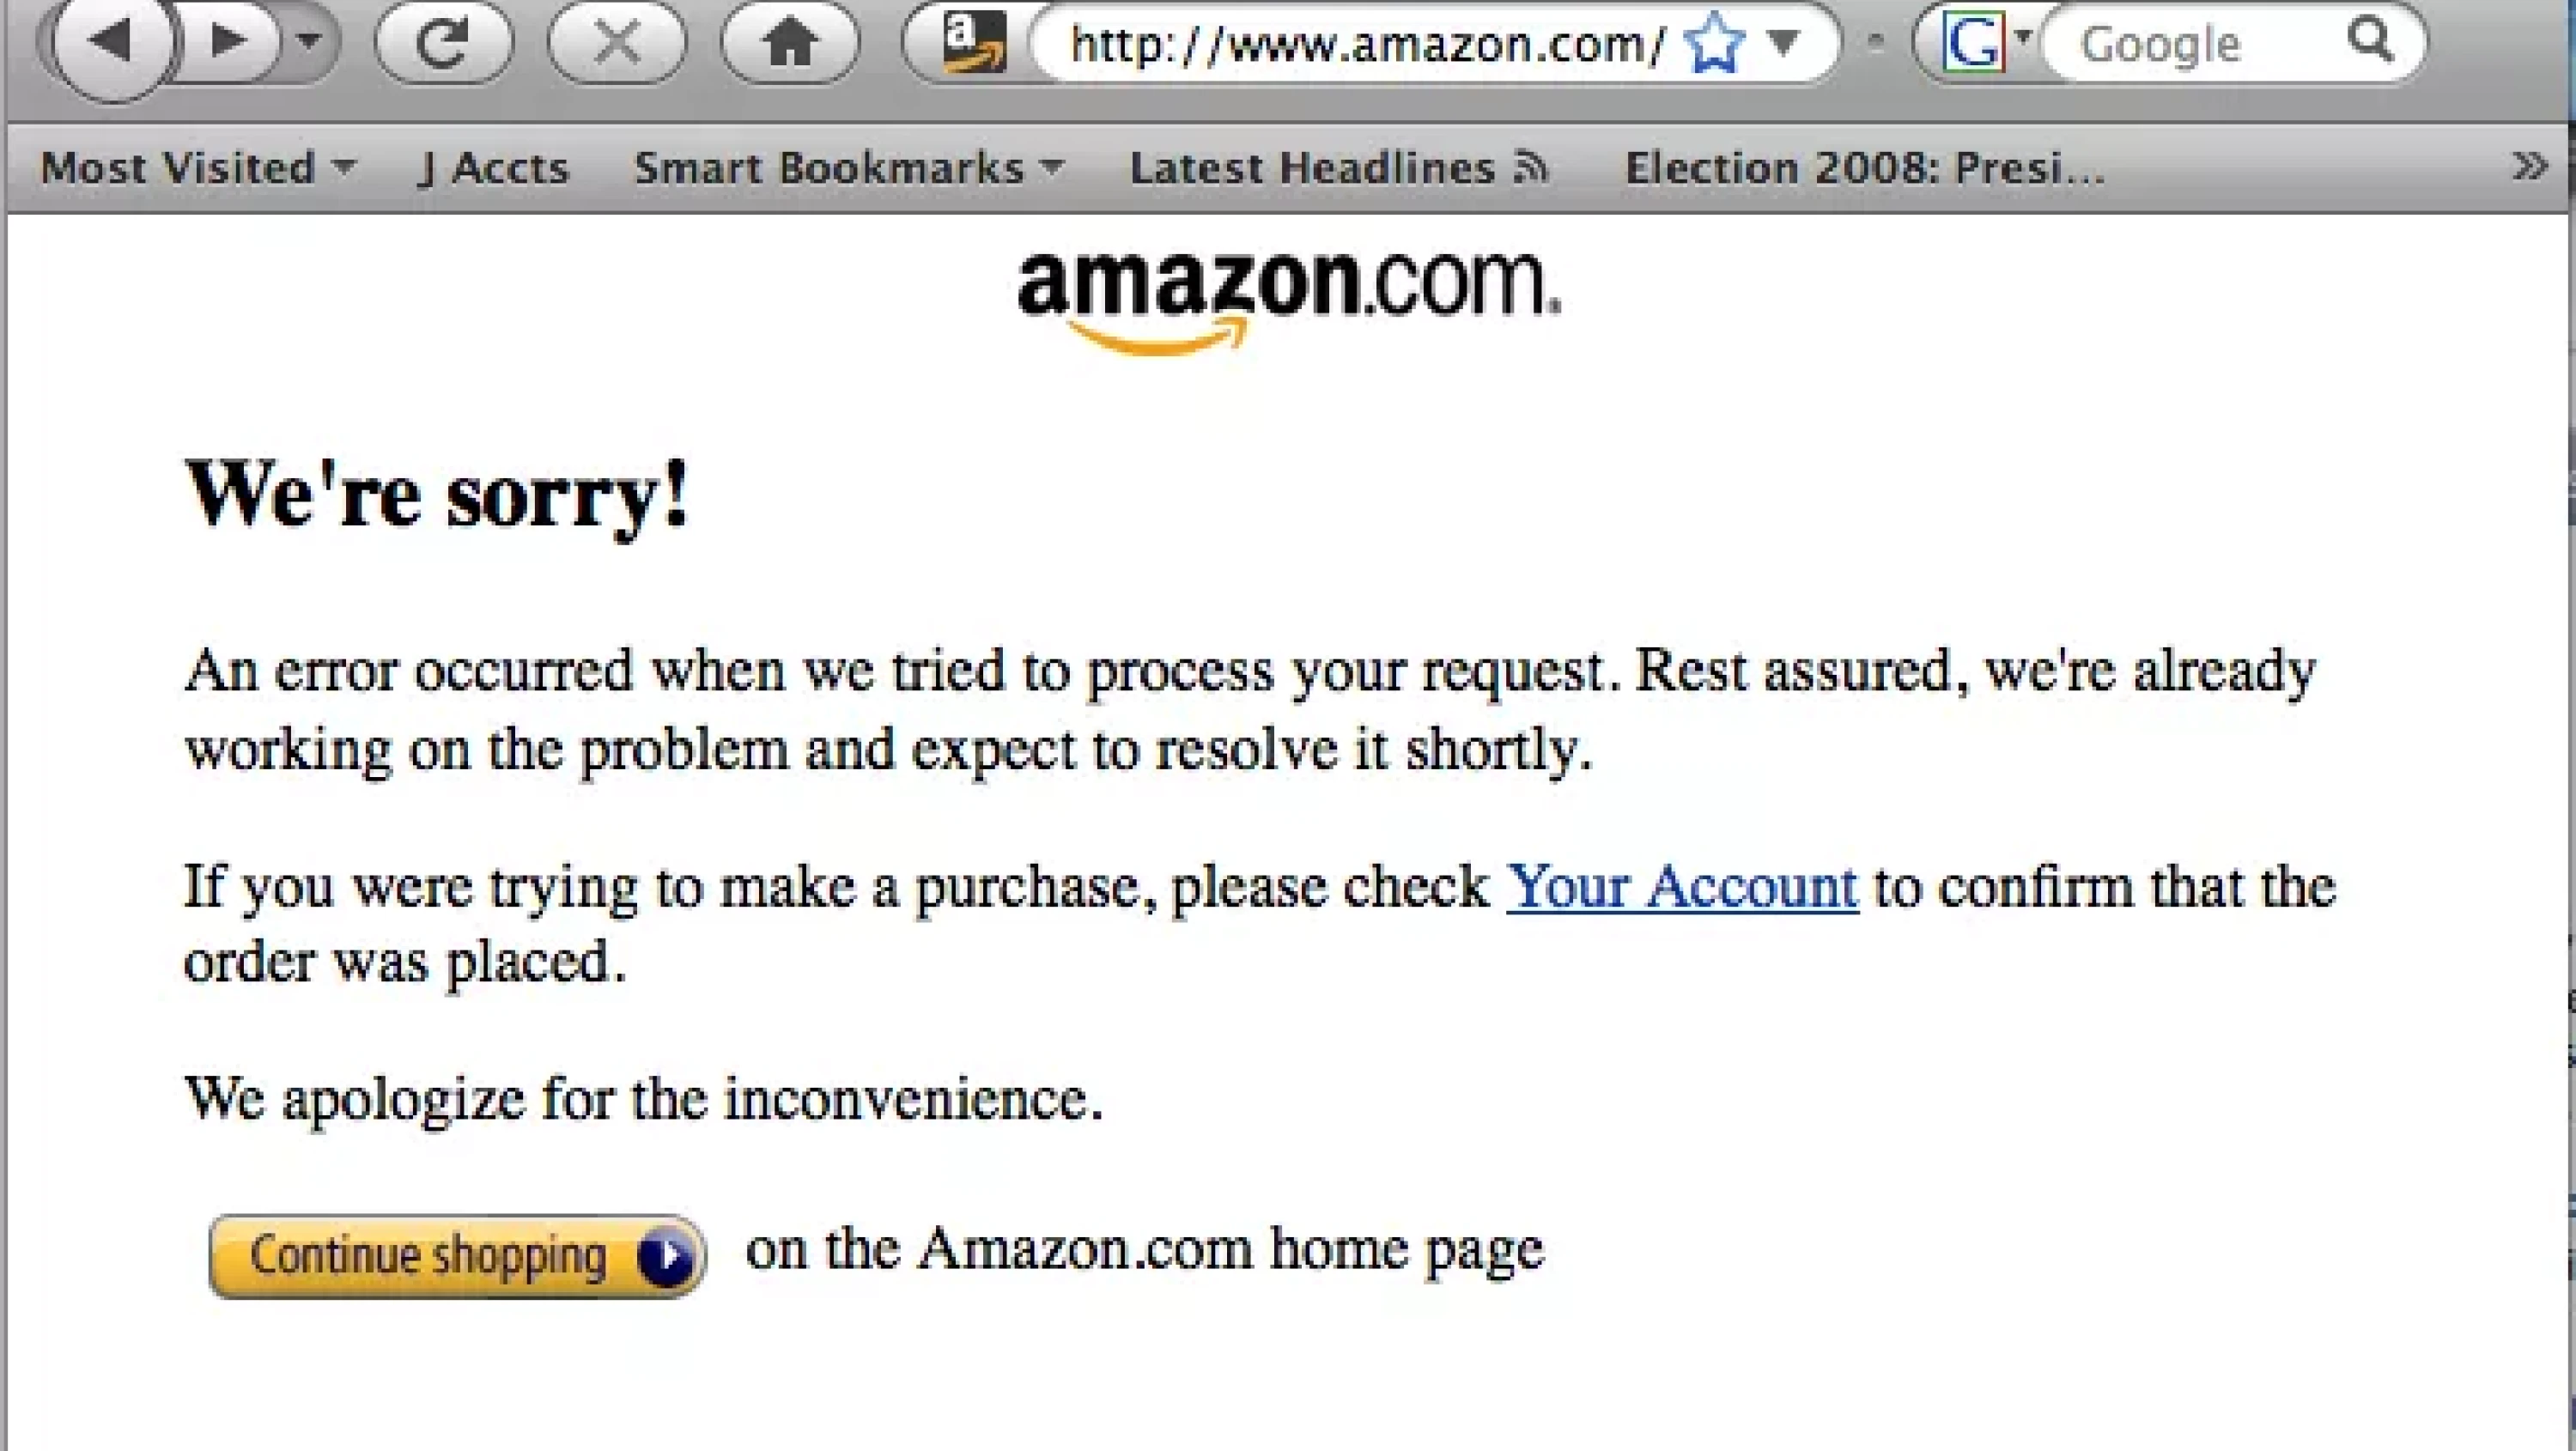 Amazon Still down, money down too